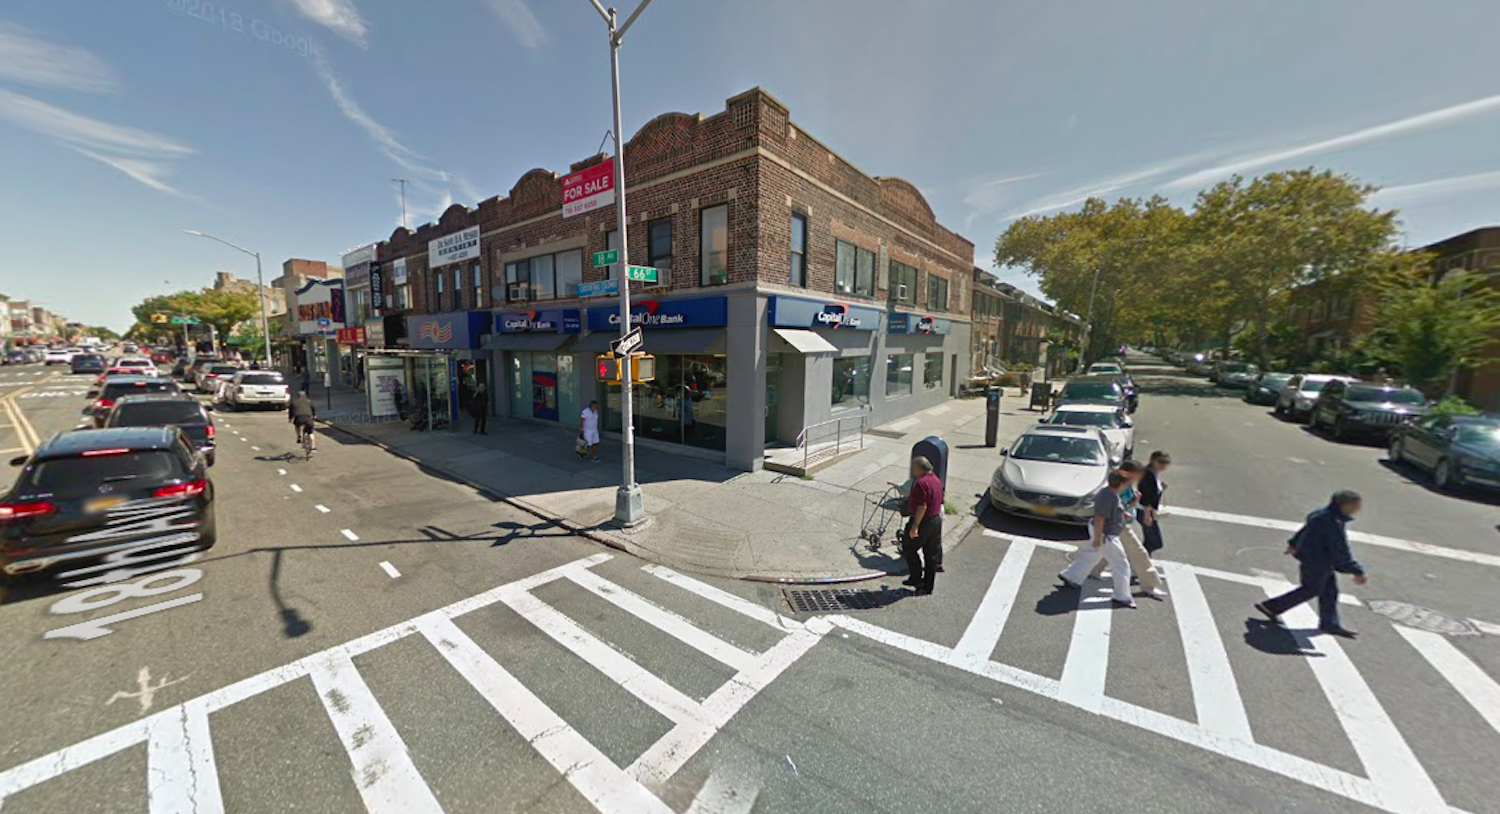 1801 66th Street in Bensonhurst, Brooklyn